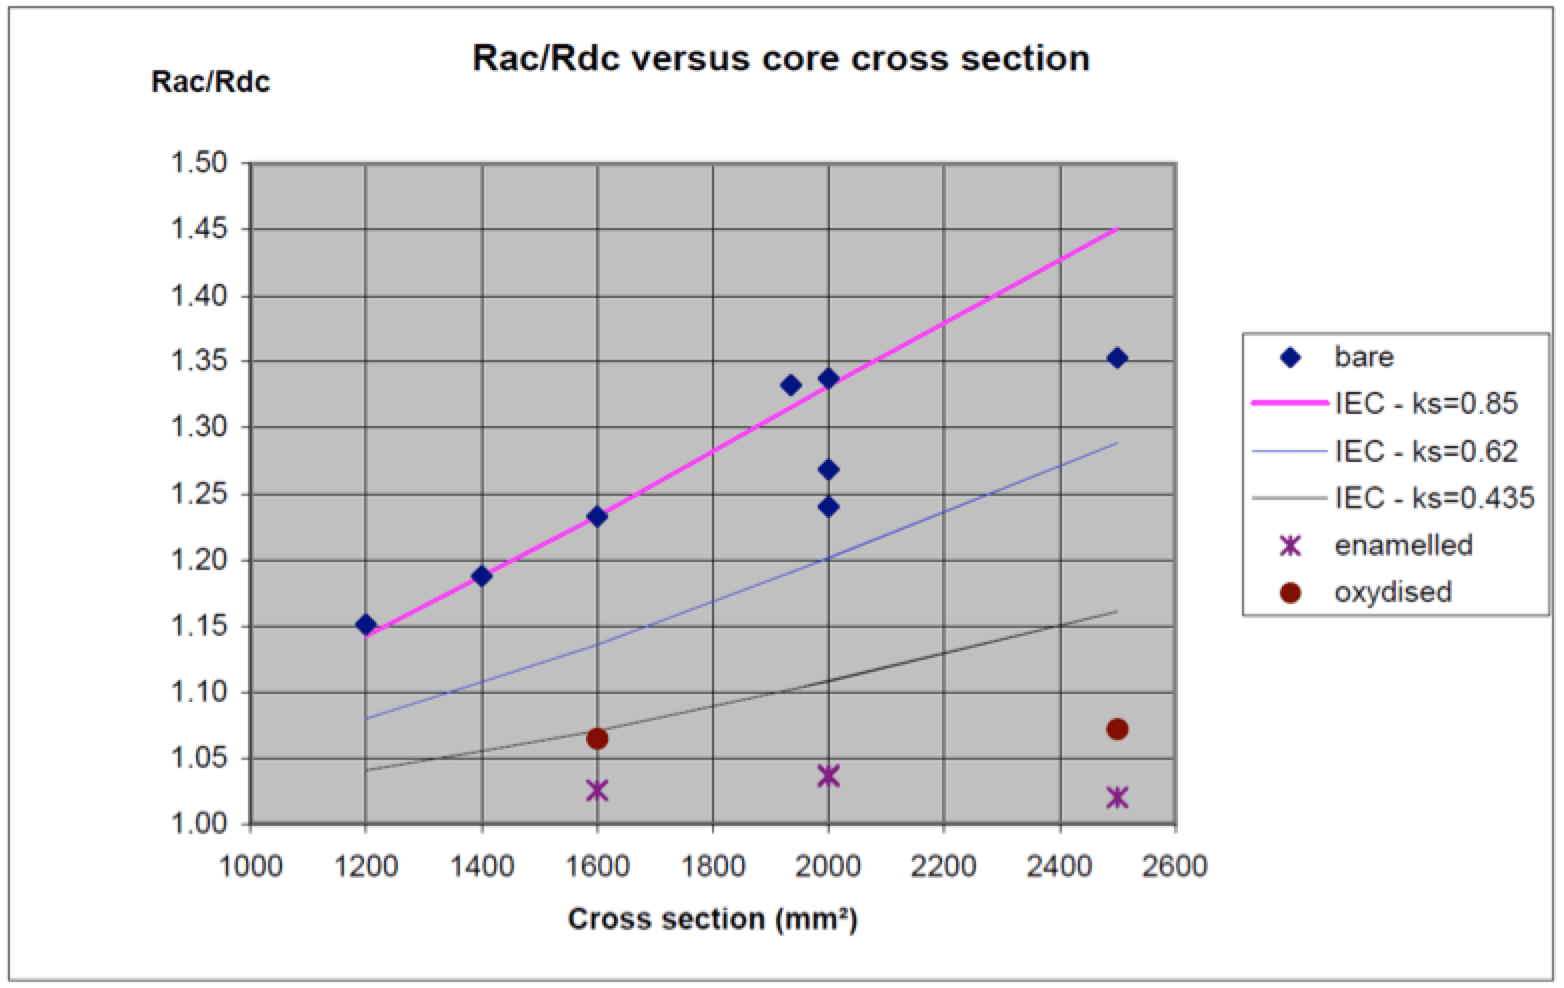 Chart 3: Rac/Rdc versus cable set up.